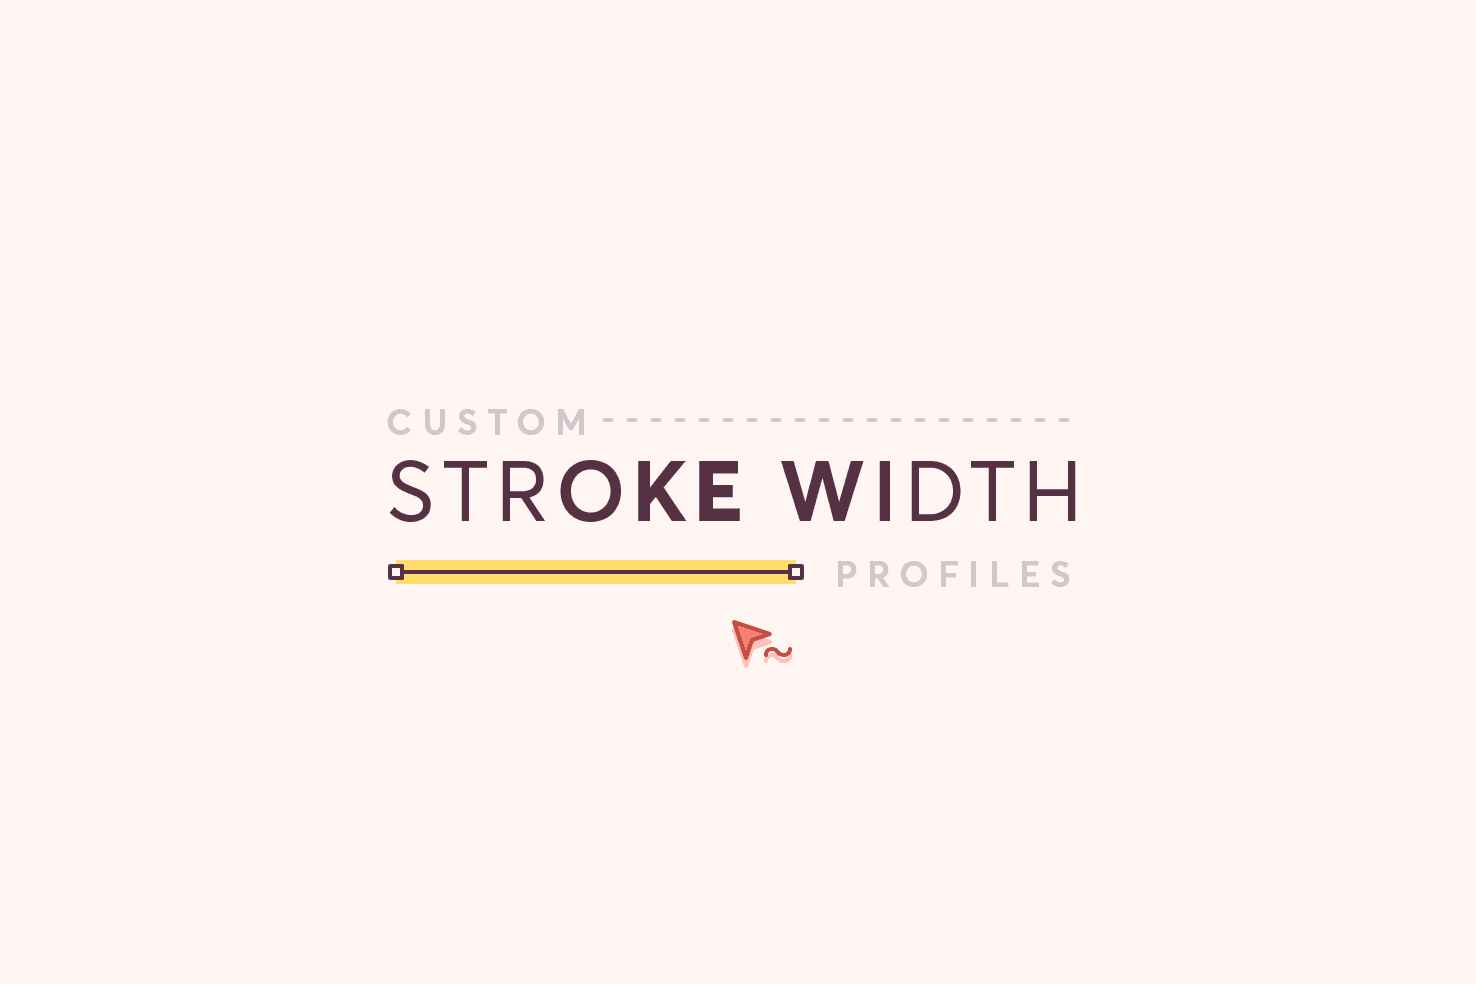 Creating custom stroke width profiles in Illustrator (featured image)